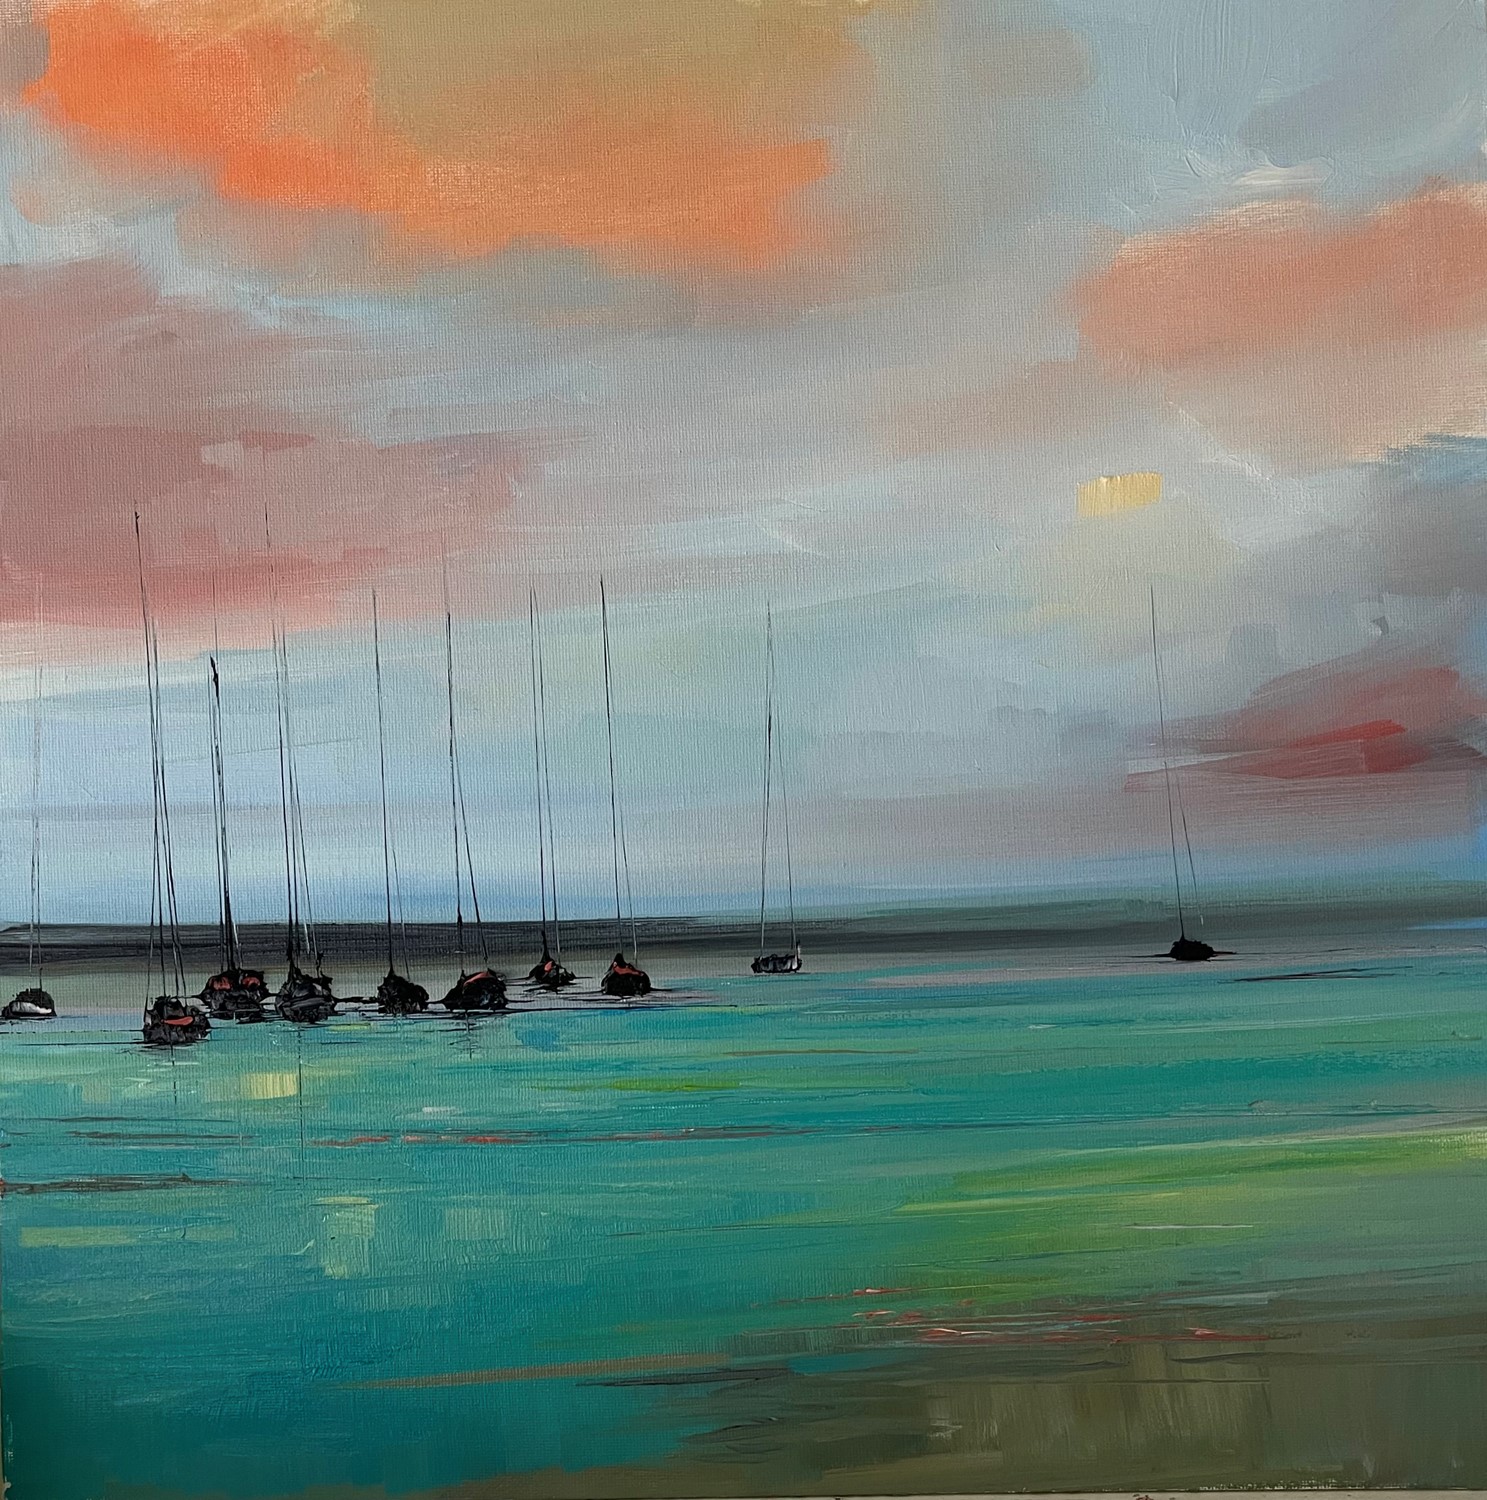 'Docked at high tide' by artist Rosanne Barr